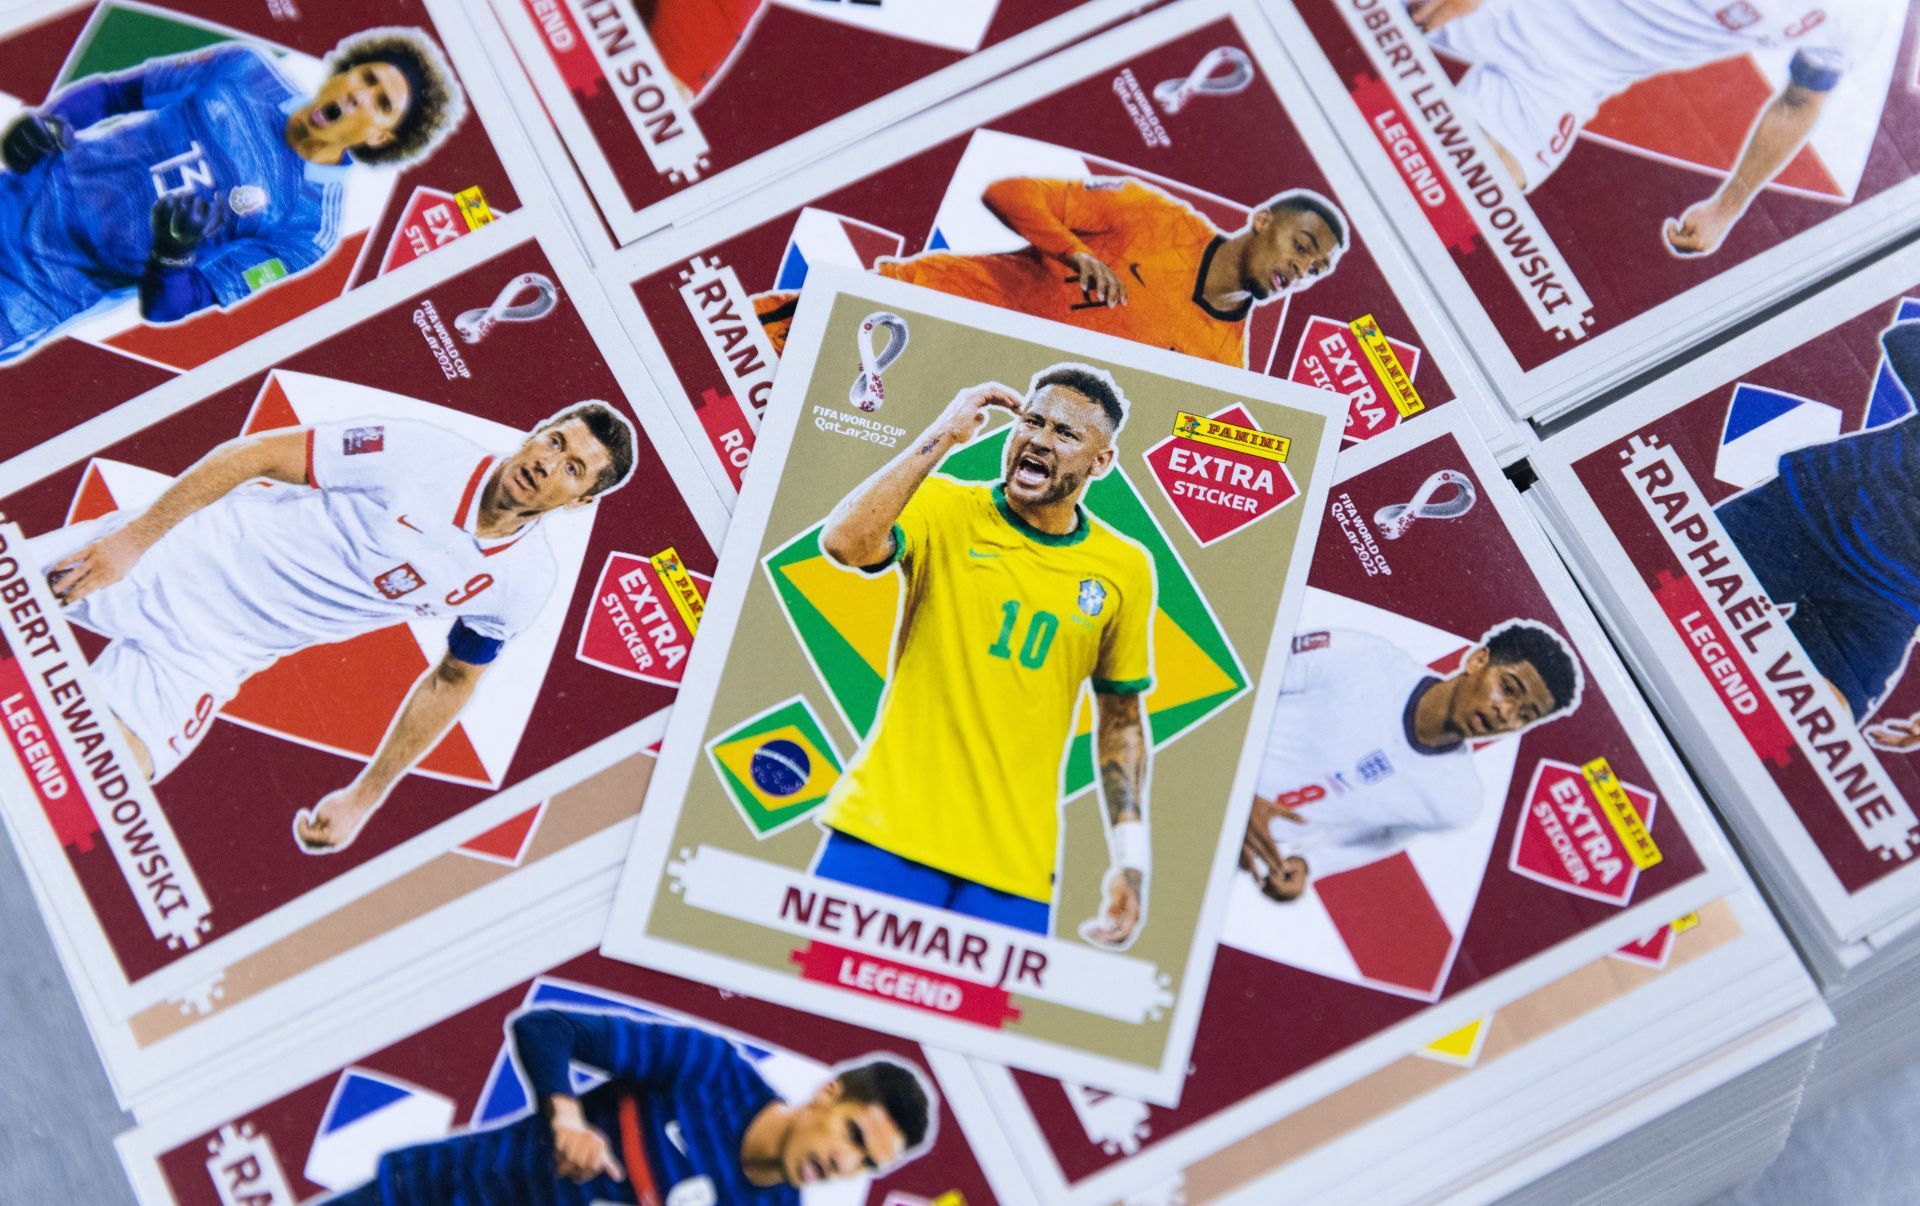 Panini Hub in Sao Paulo Distributes Football Sticker Amid World Cup Fever